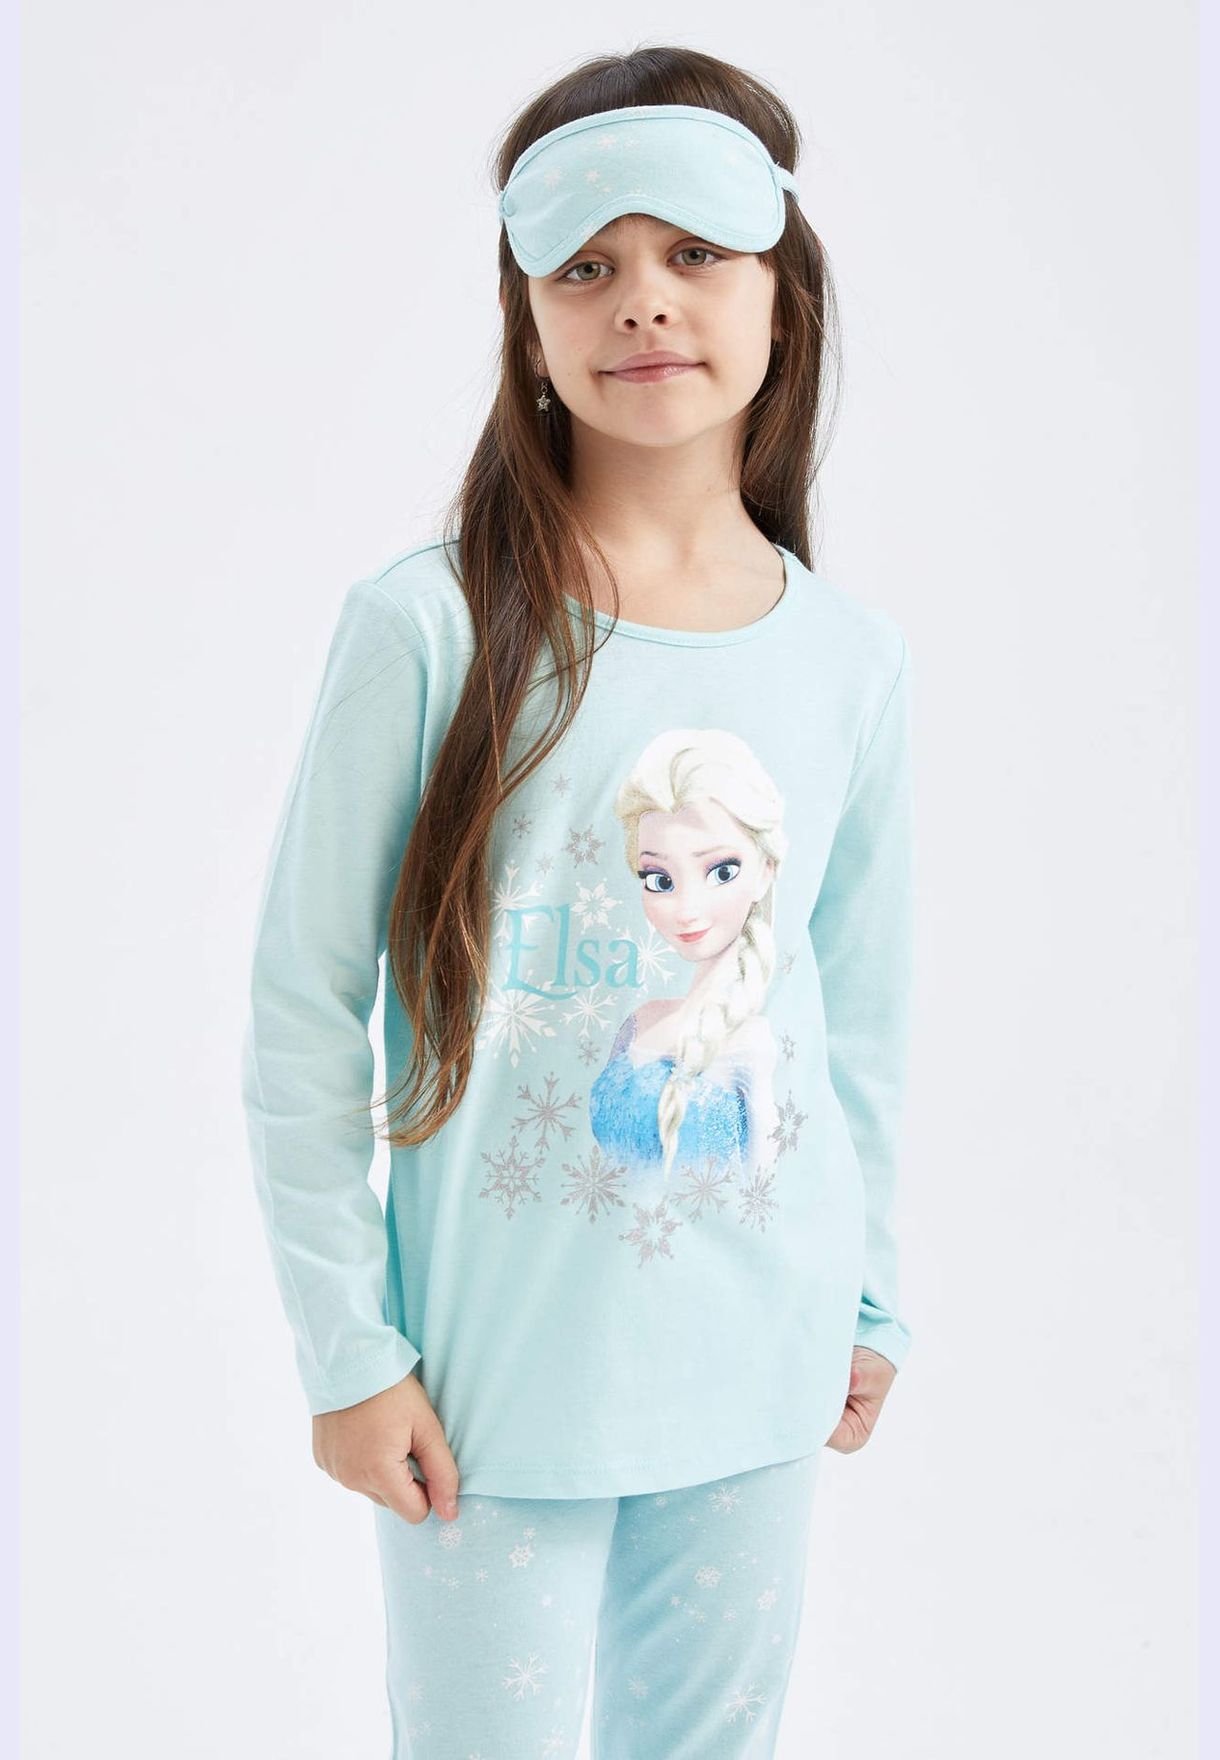 2 Pack Girl Frozen Licenced Long Sleeve Knitted Pyjamas